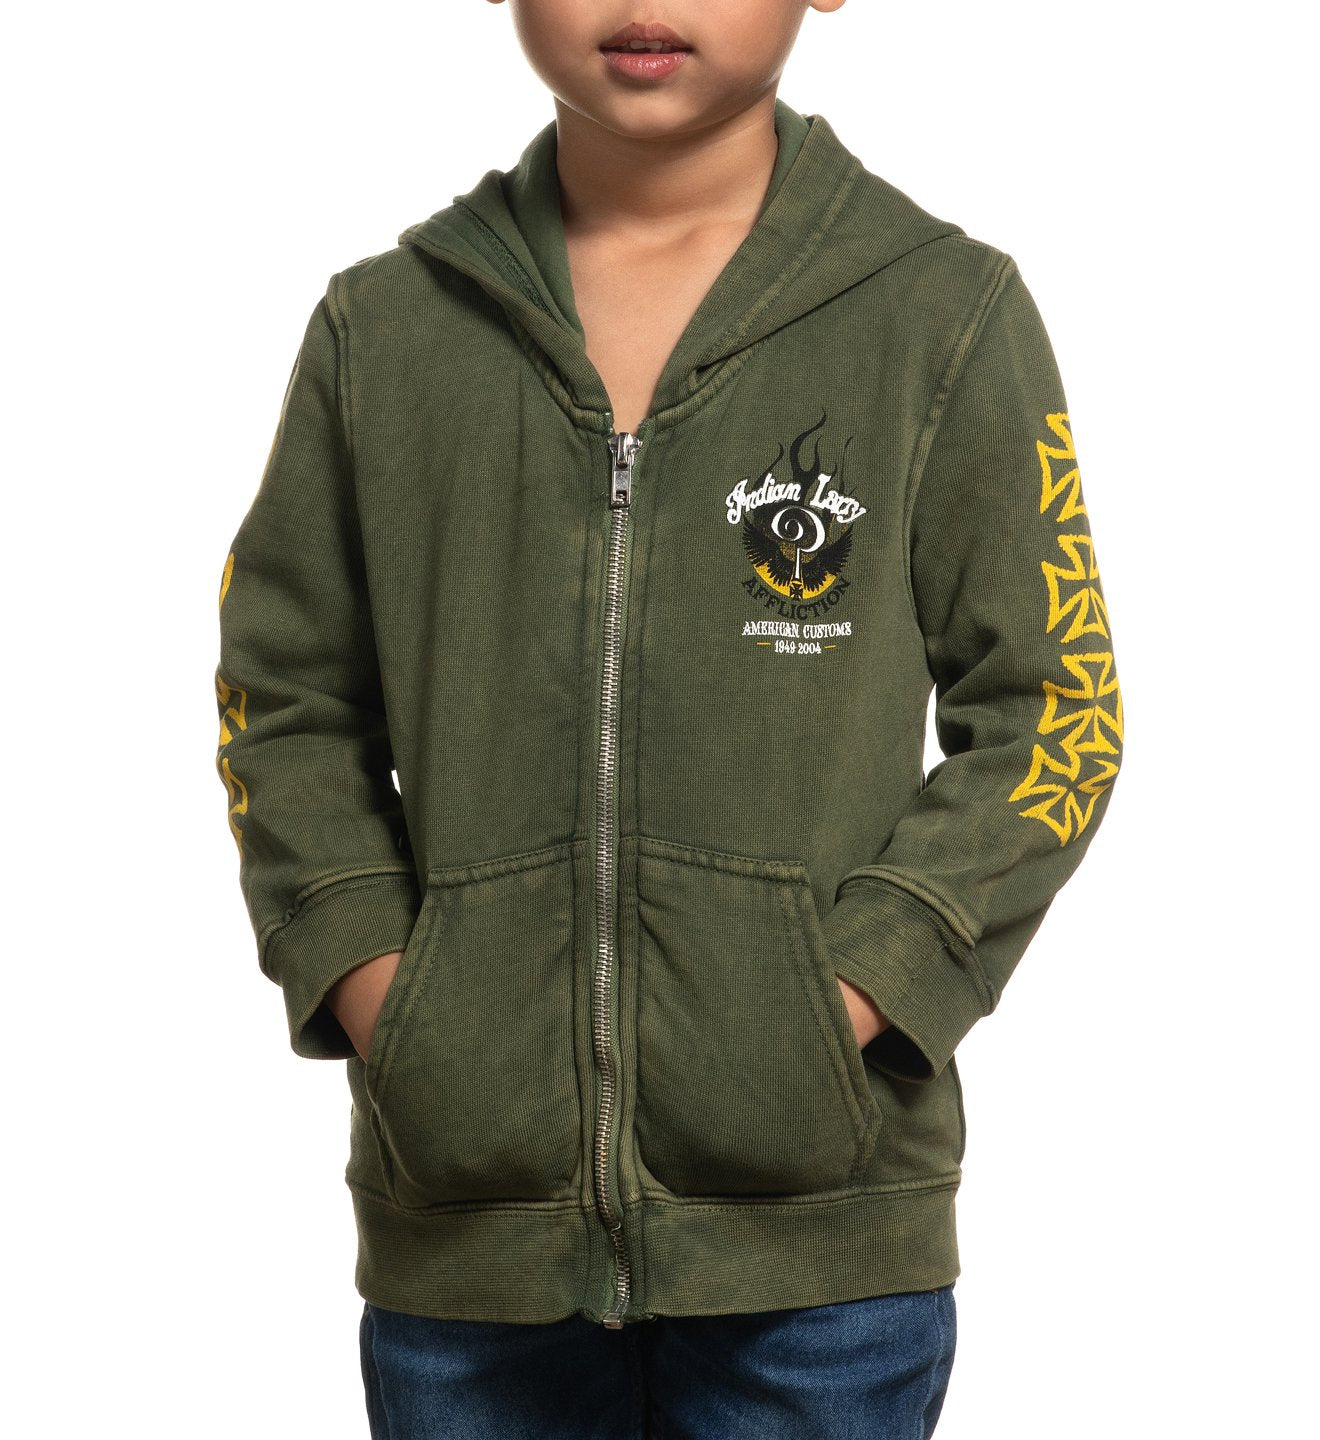 Indian Larry Shaman Zip Hood-Toddler - Toddlers Hooded Sweatshirts - Affliction Clothing